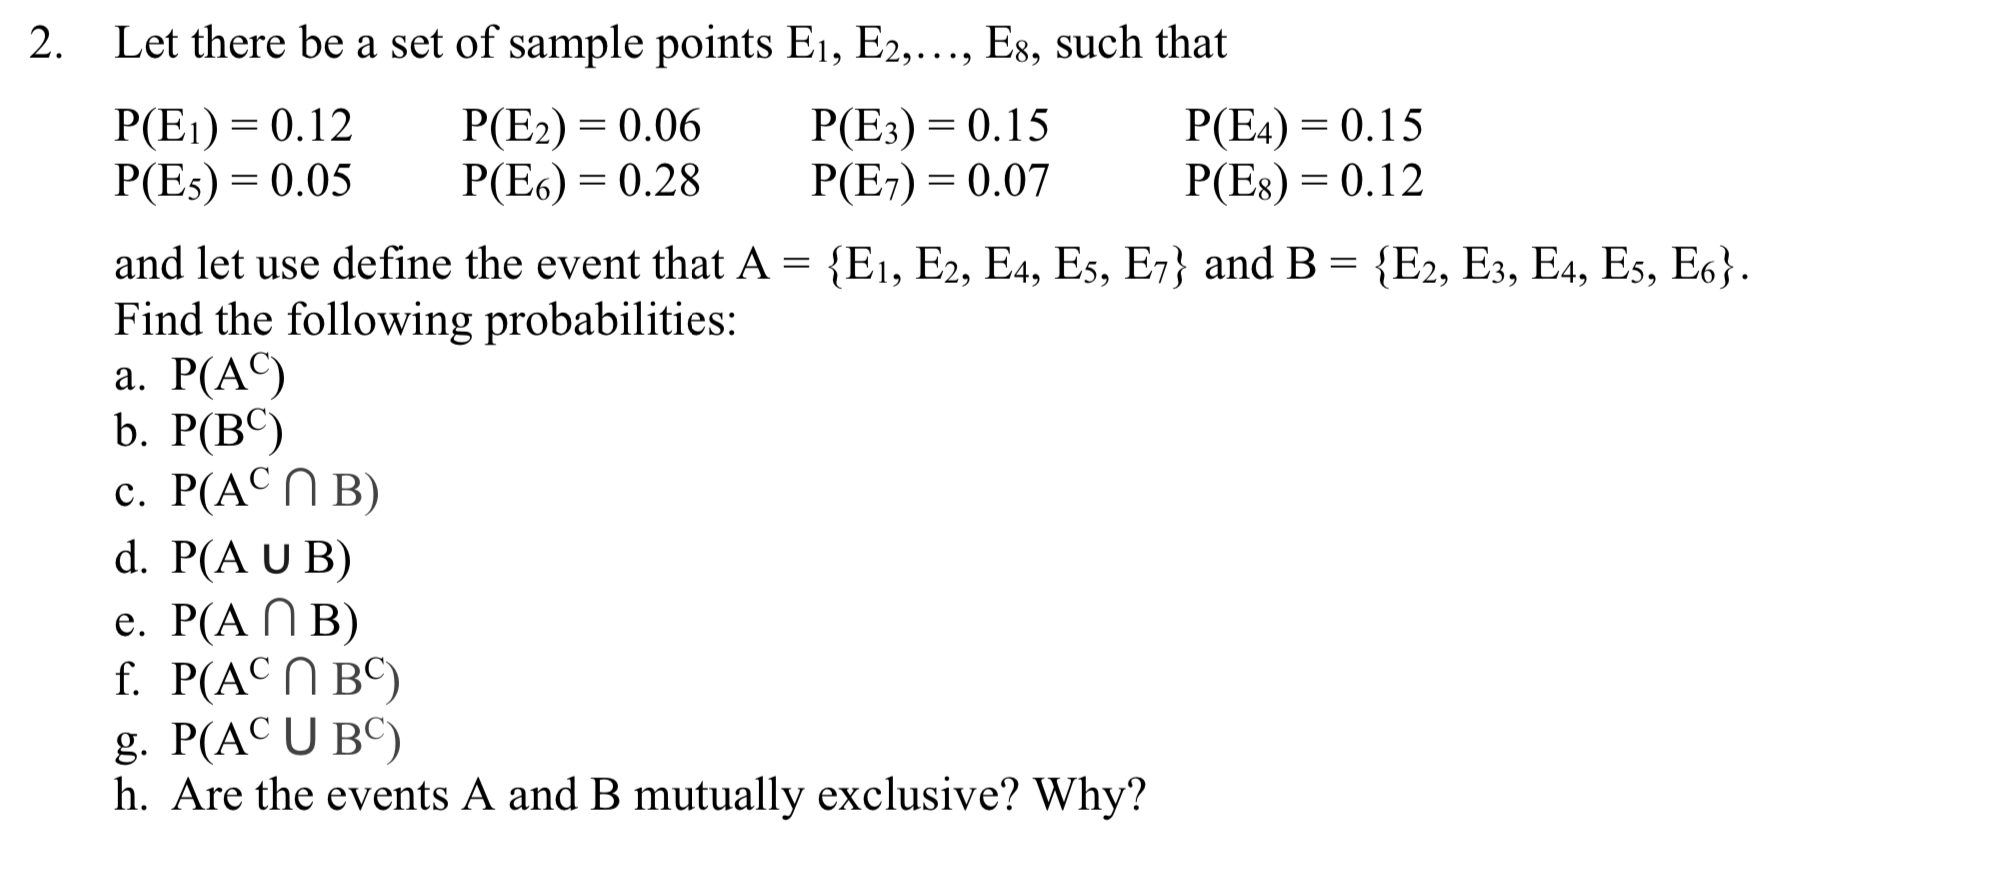 2. Let there be a set of sample points E1, E2,..., Es, such that P(Ei) = 0.12 P(E2) = 0.06 P(E3) = 0.15 P(E4) = 0.15 P(E5) =